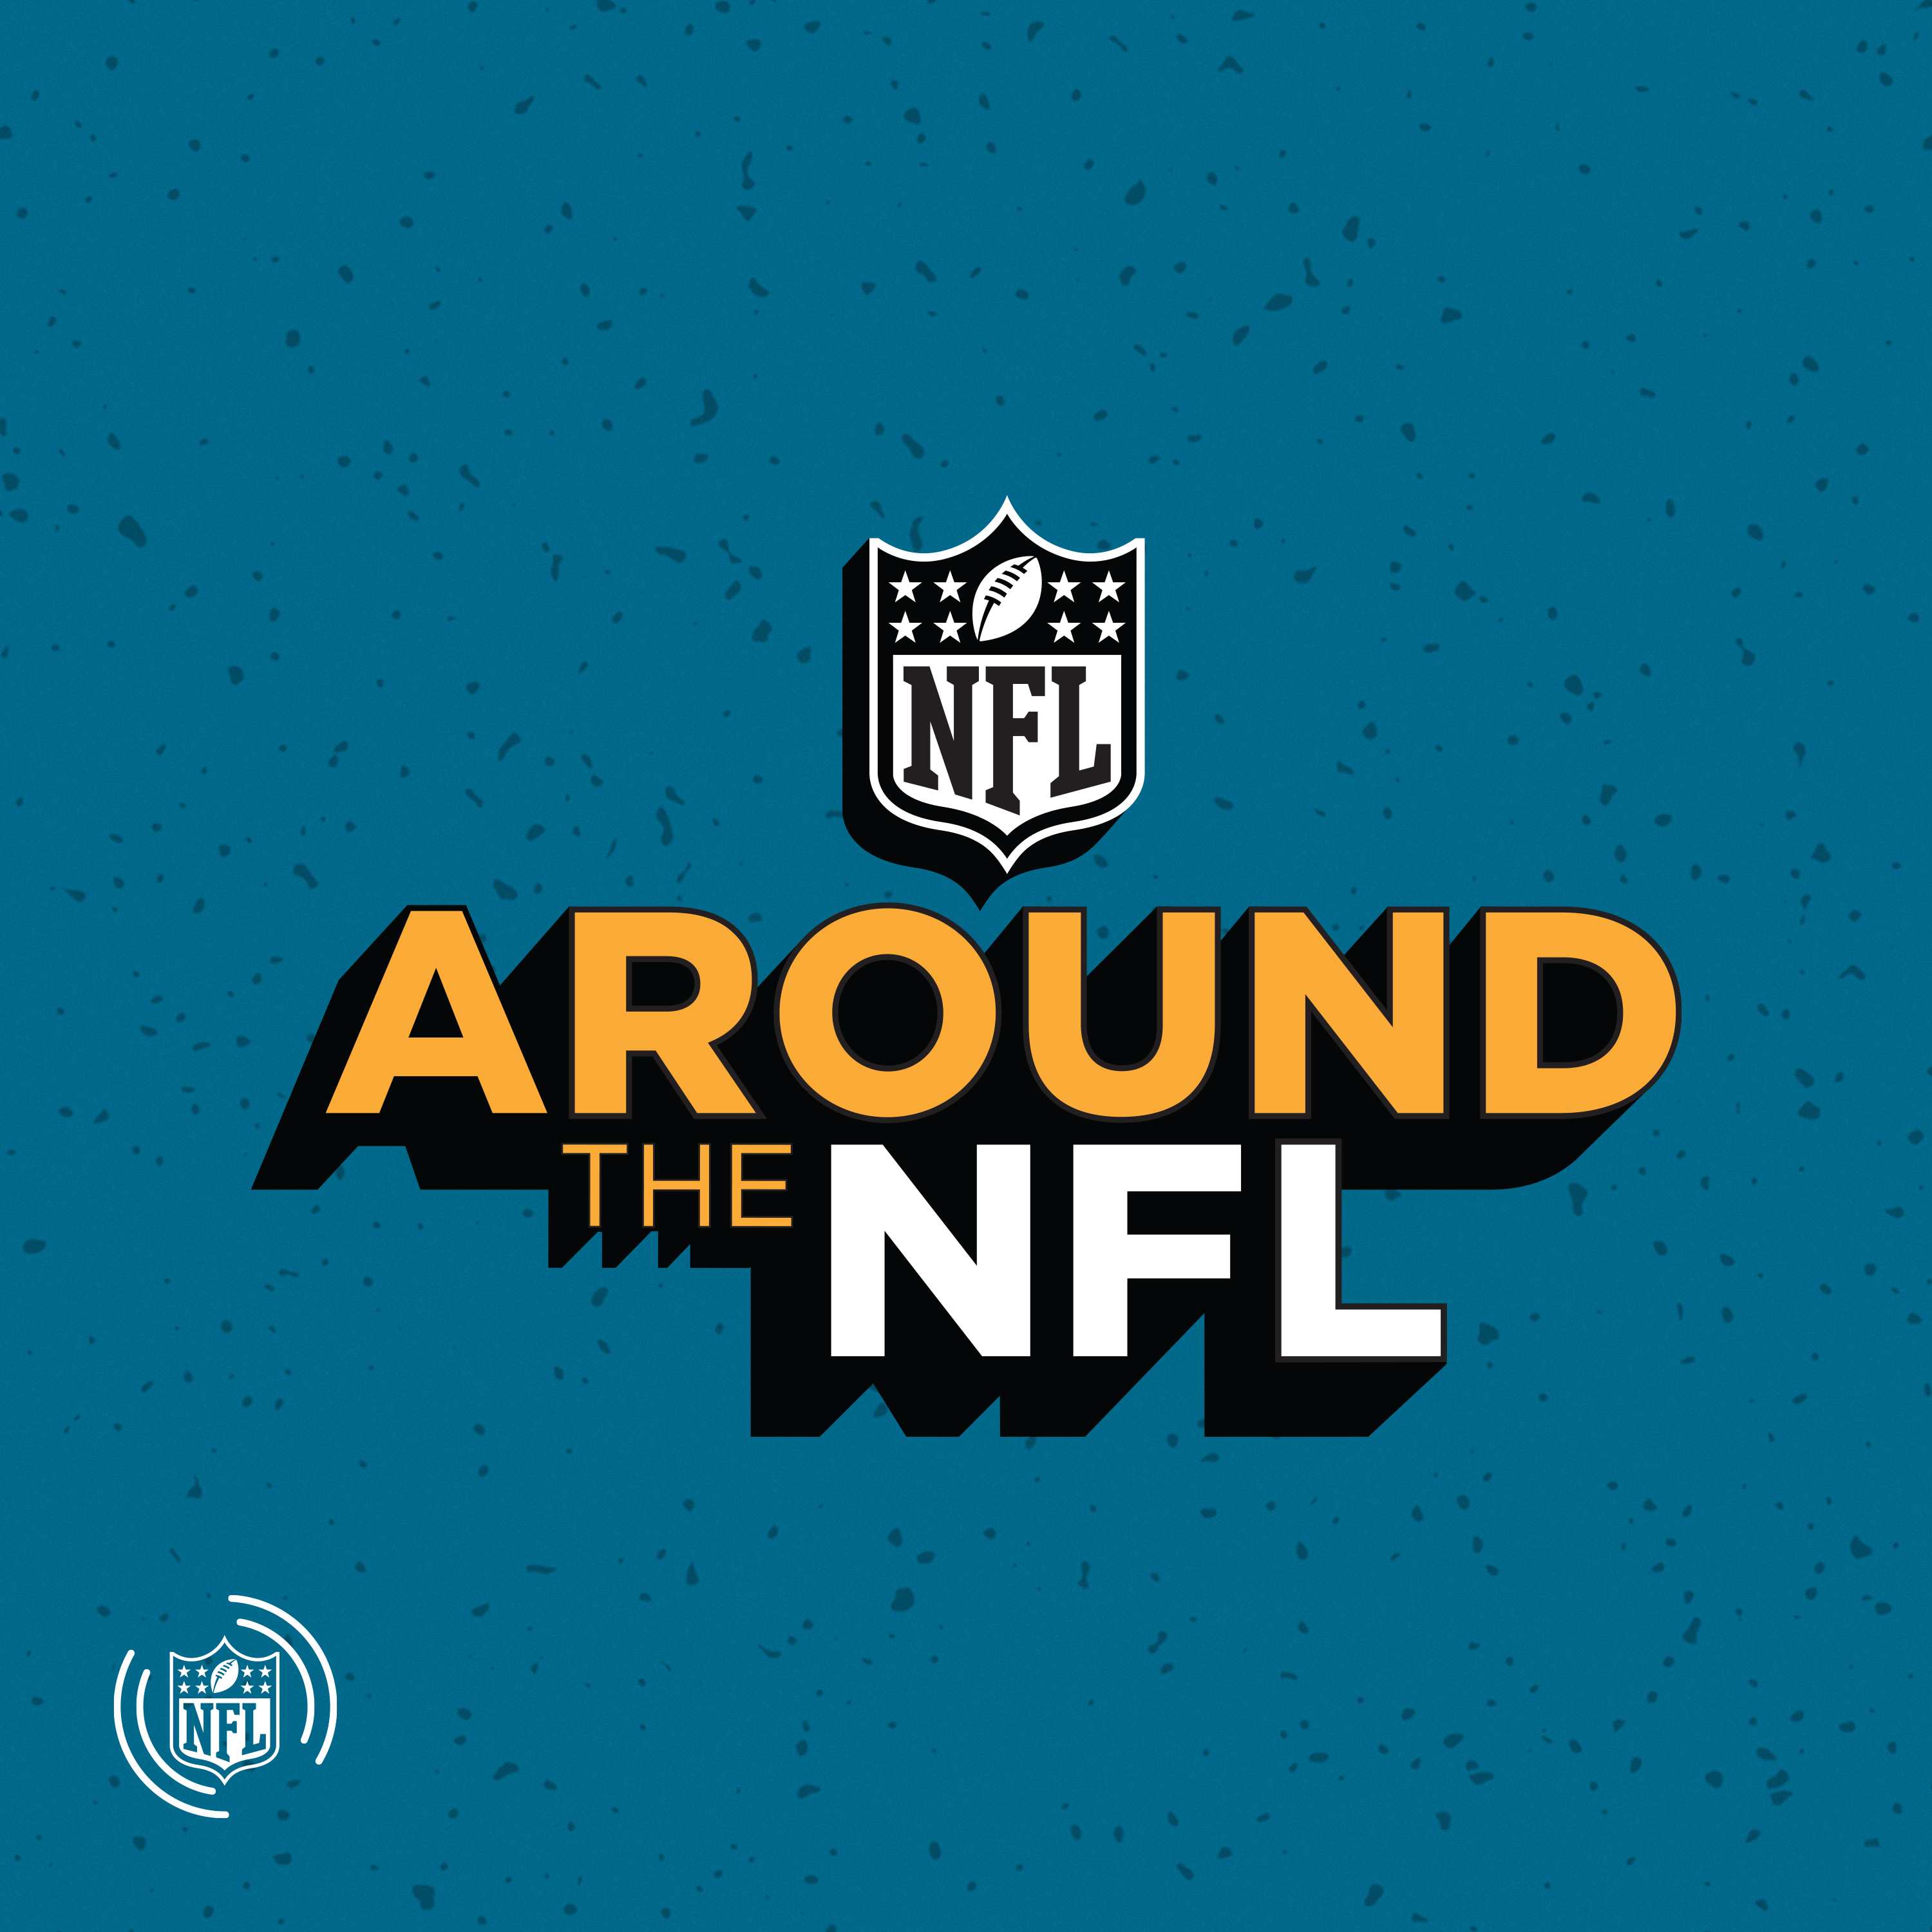 NFL ATL: Week 8 recap